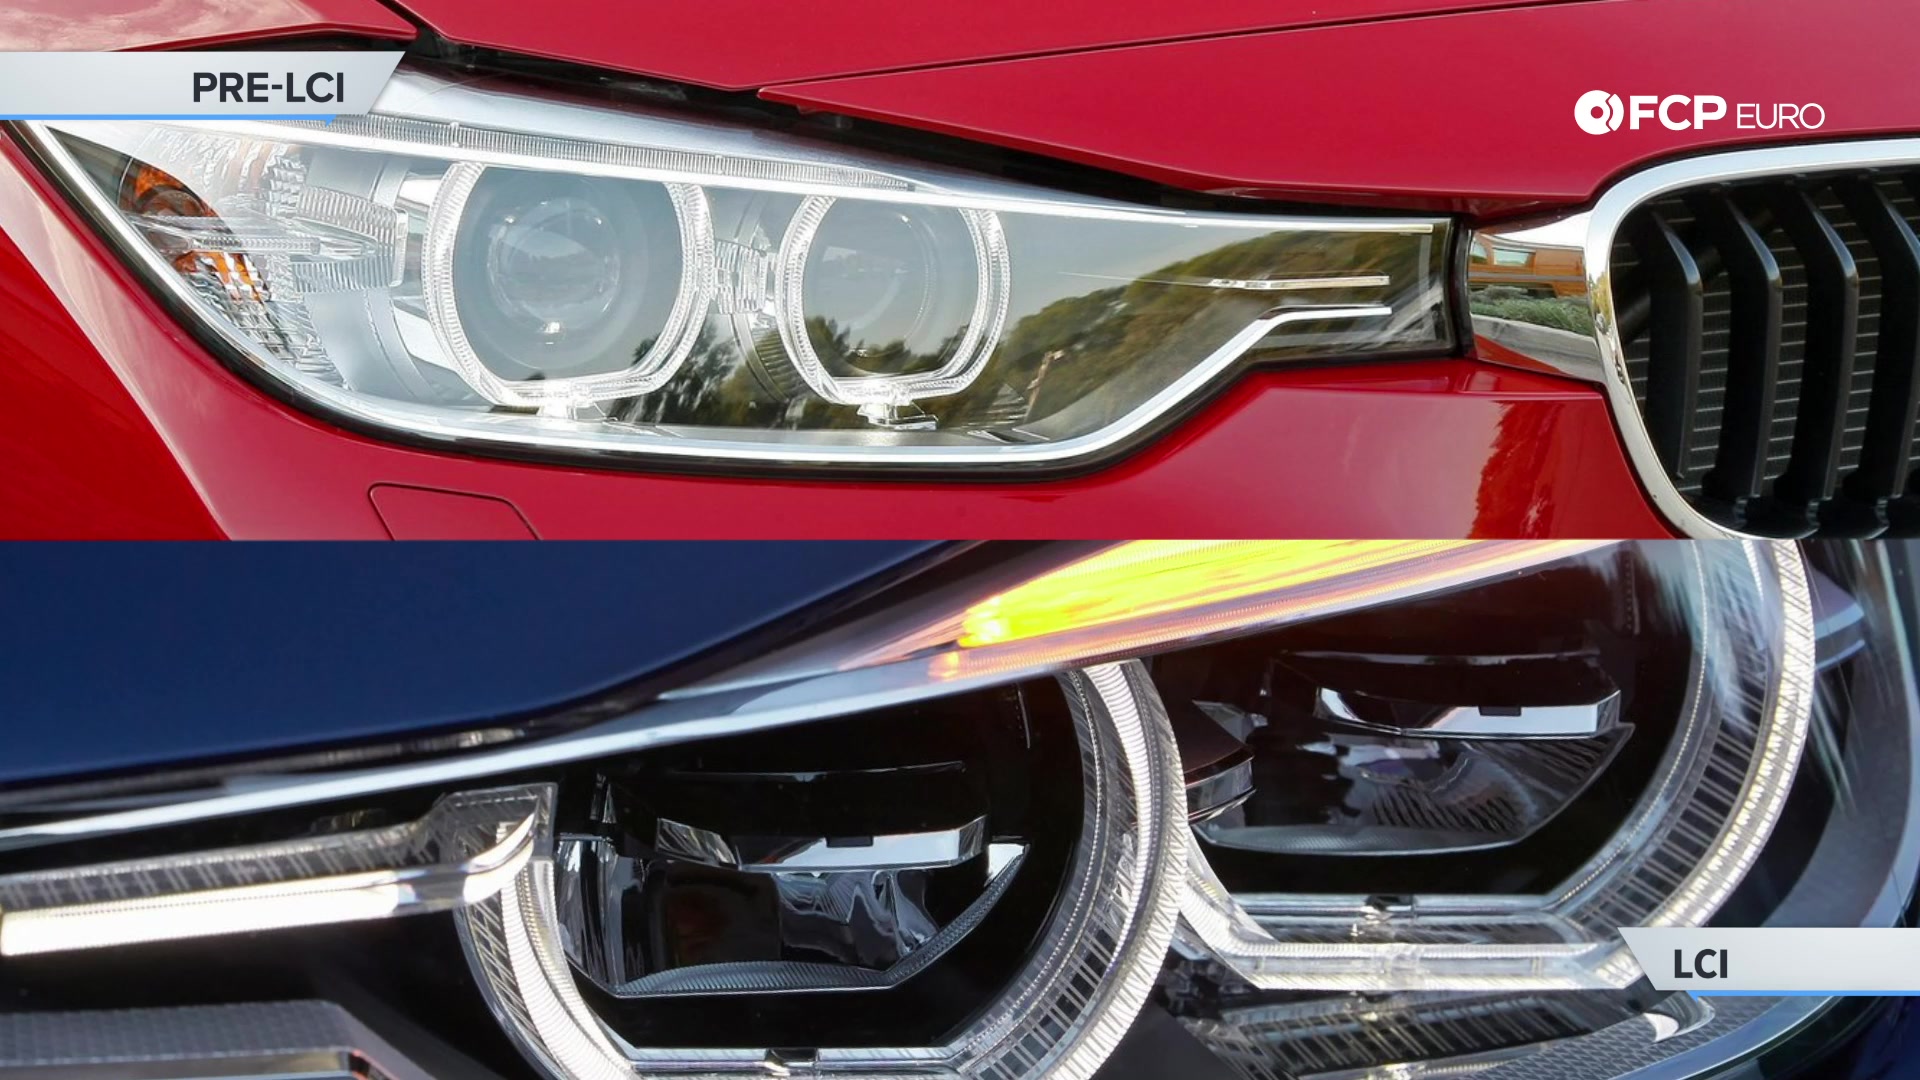 EVERGREEN BMW E90 VS F30 LCI headlight differences